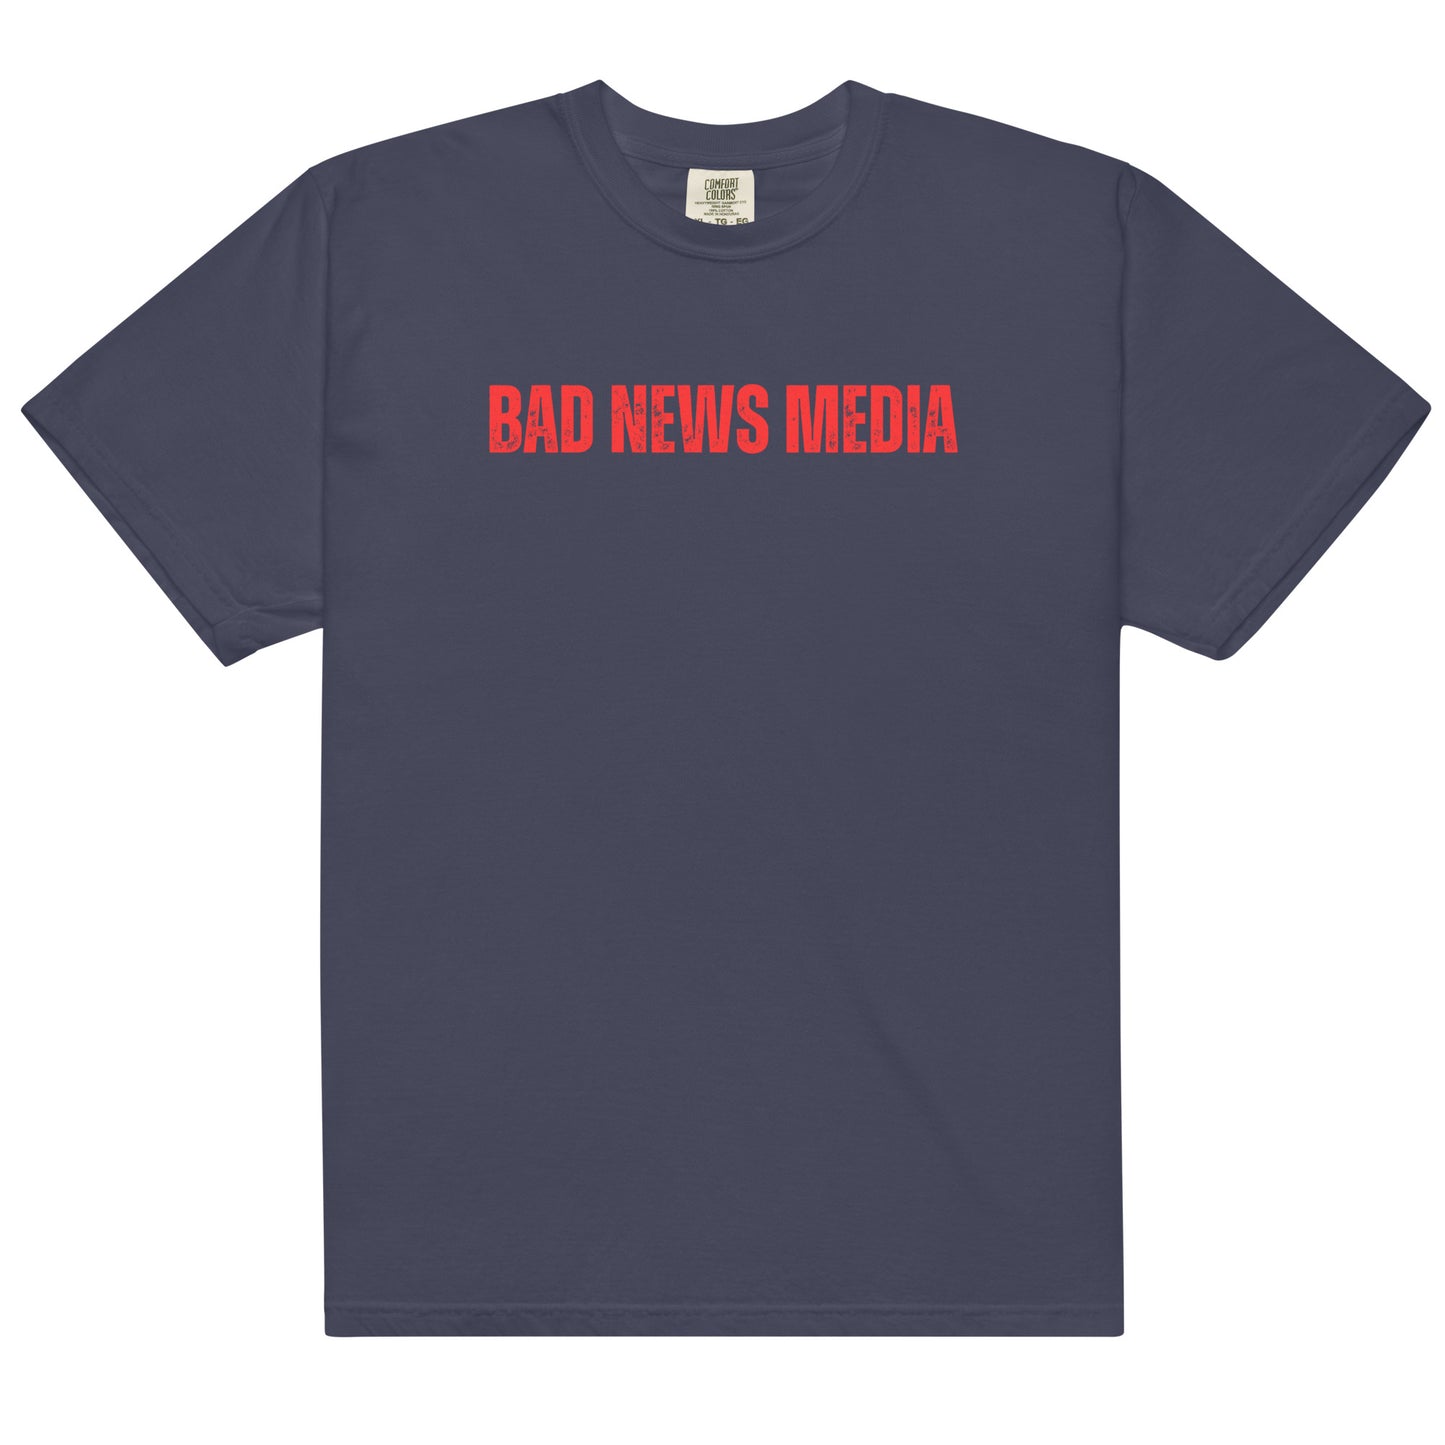 Bad News Media garment-dyed heavyweight t-shirt